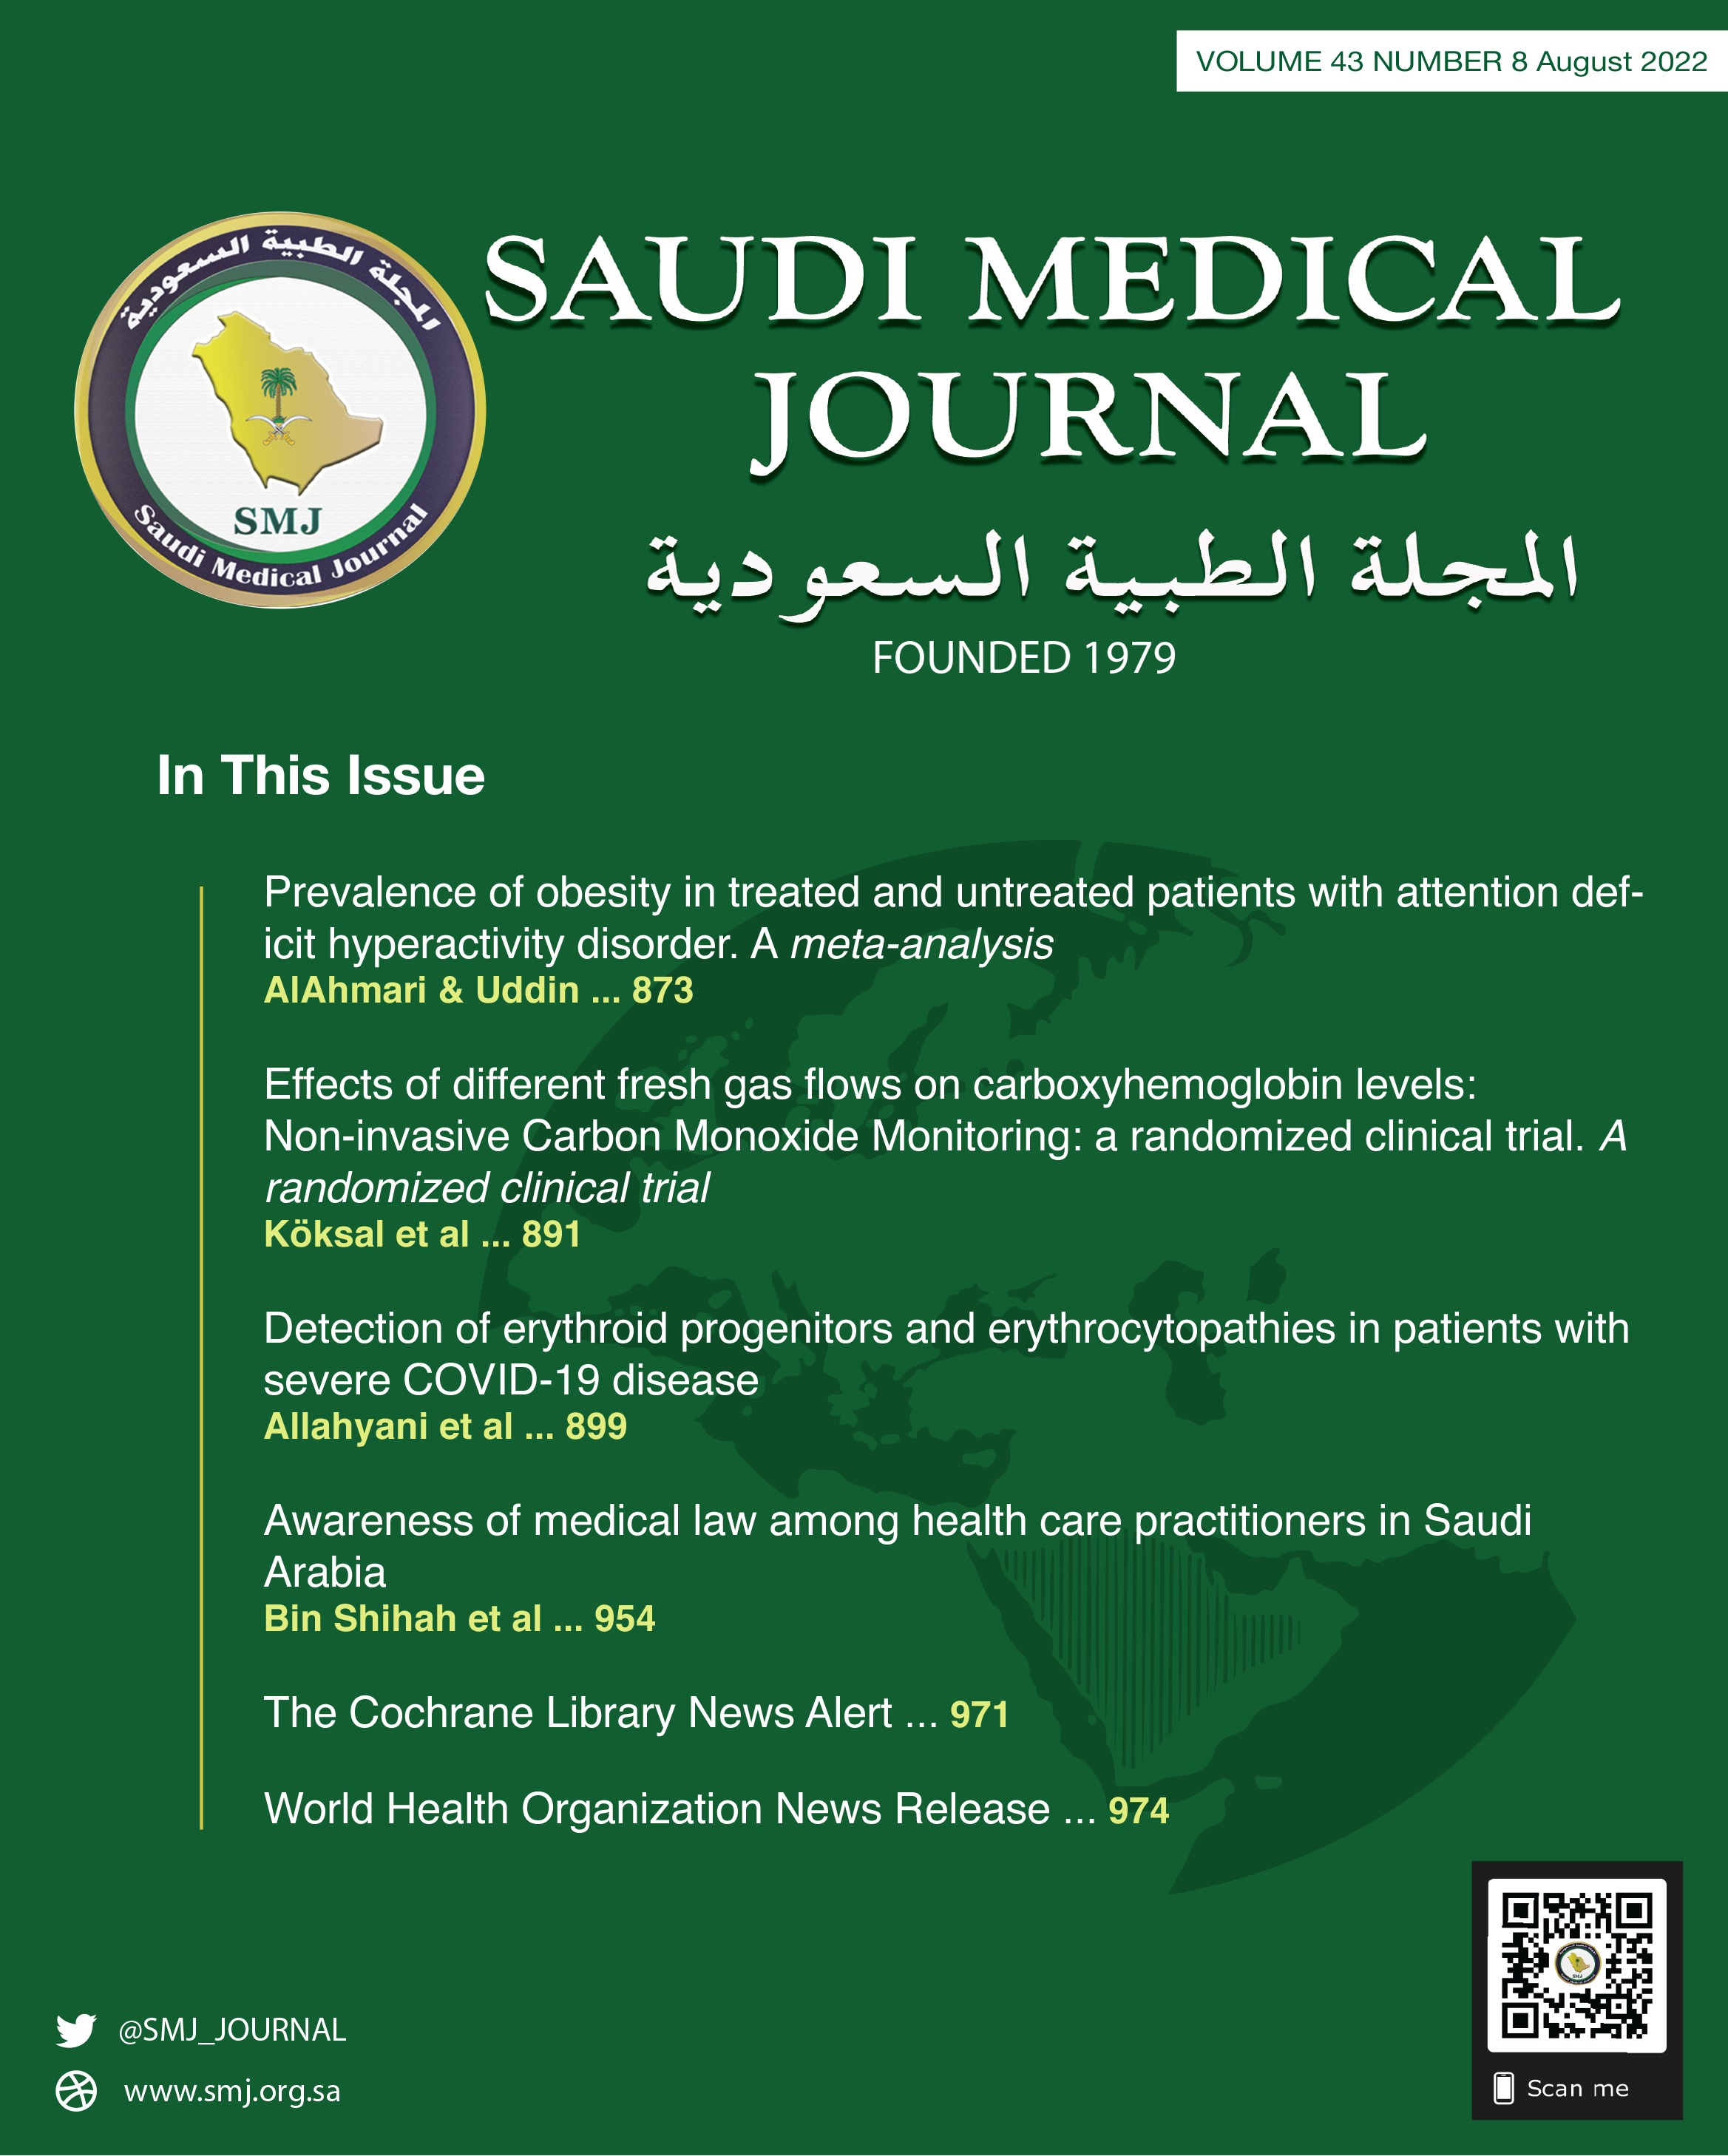 Impact of COVID-19 pandemic quarantine on dietary behaviors and lifestyle of Saudi adults in Jeddah, Kingdom of Saudi Arabia